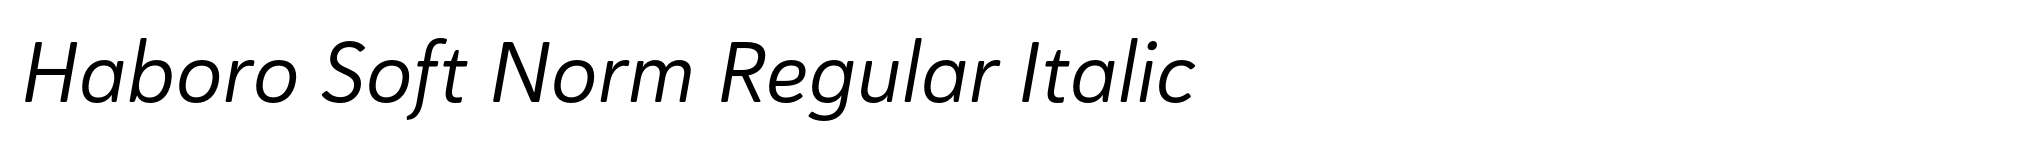 Haboro Soft Norm Regular Italic image